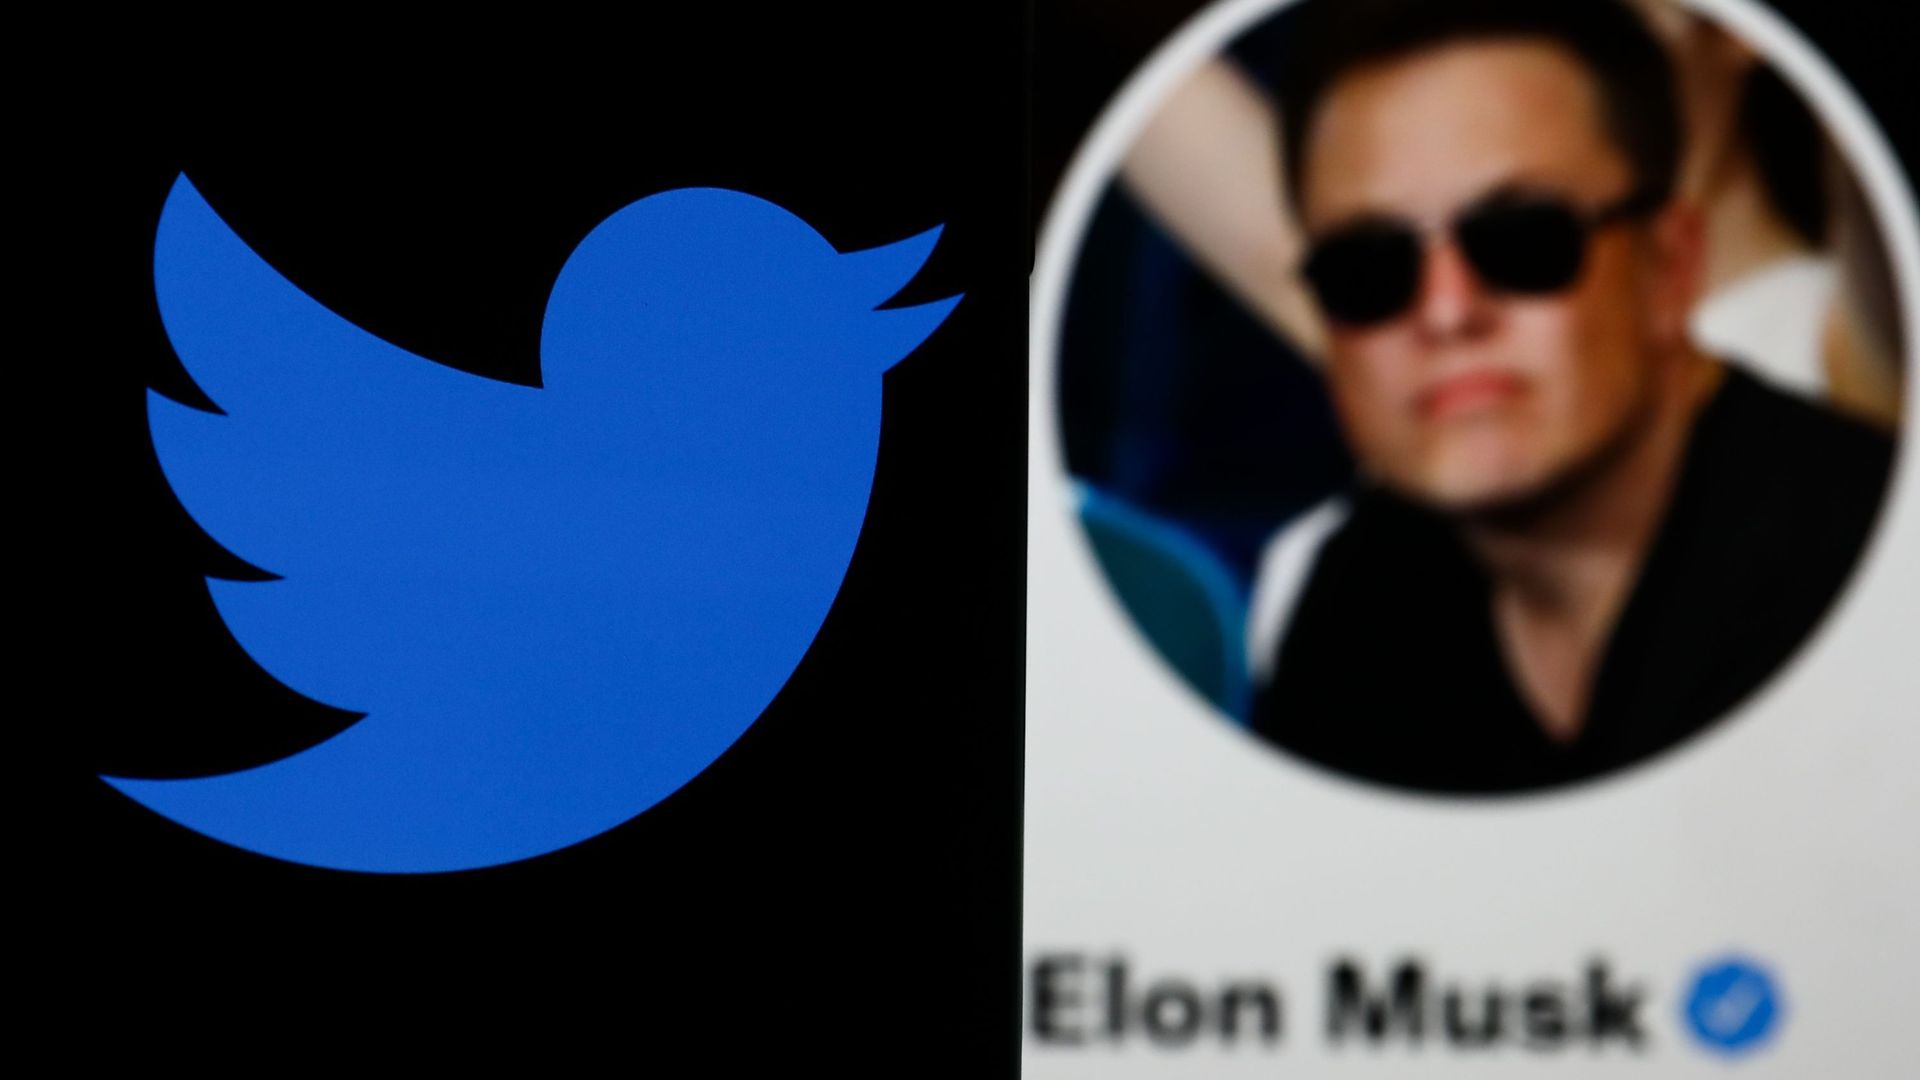 Elon Musk Acquires Twitter